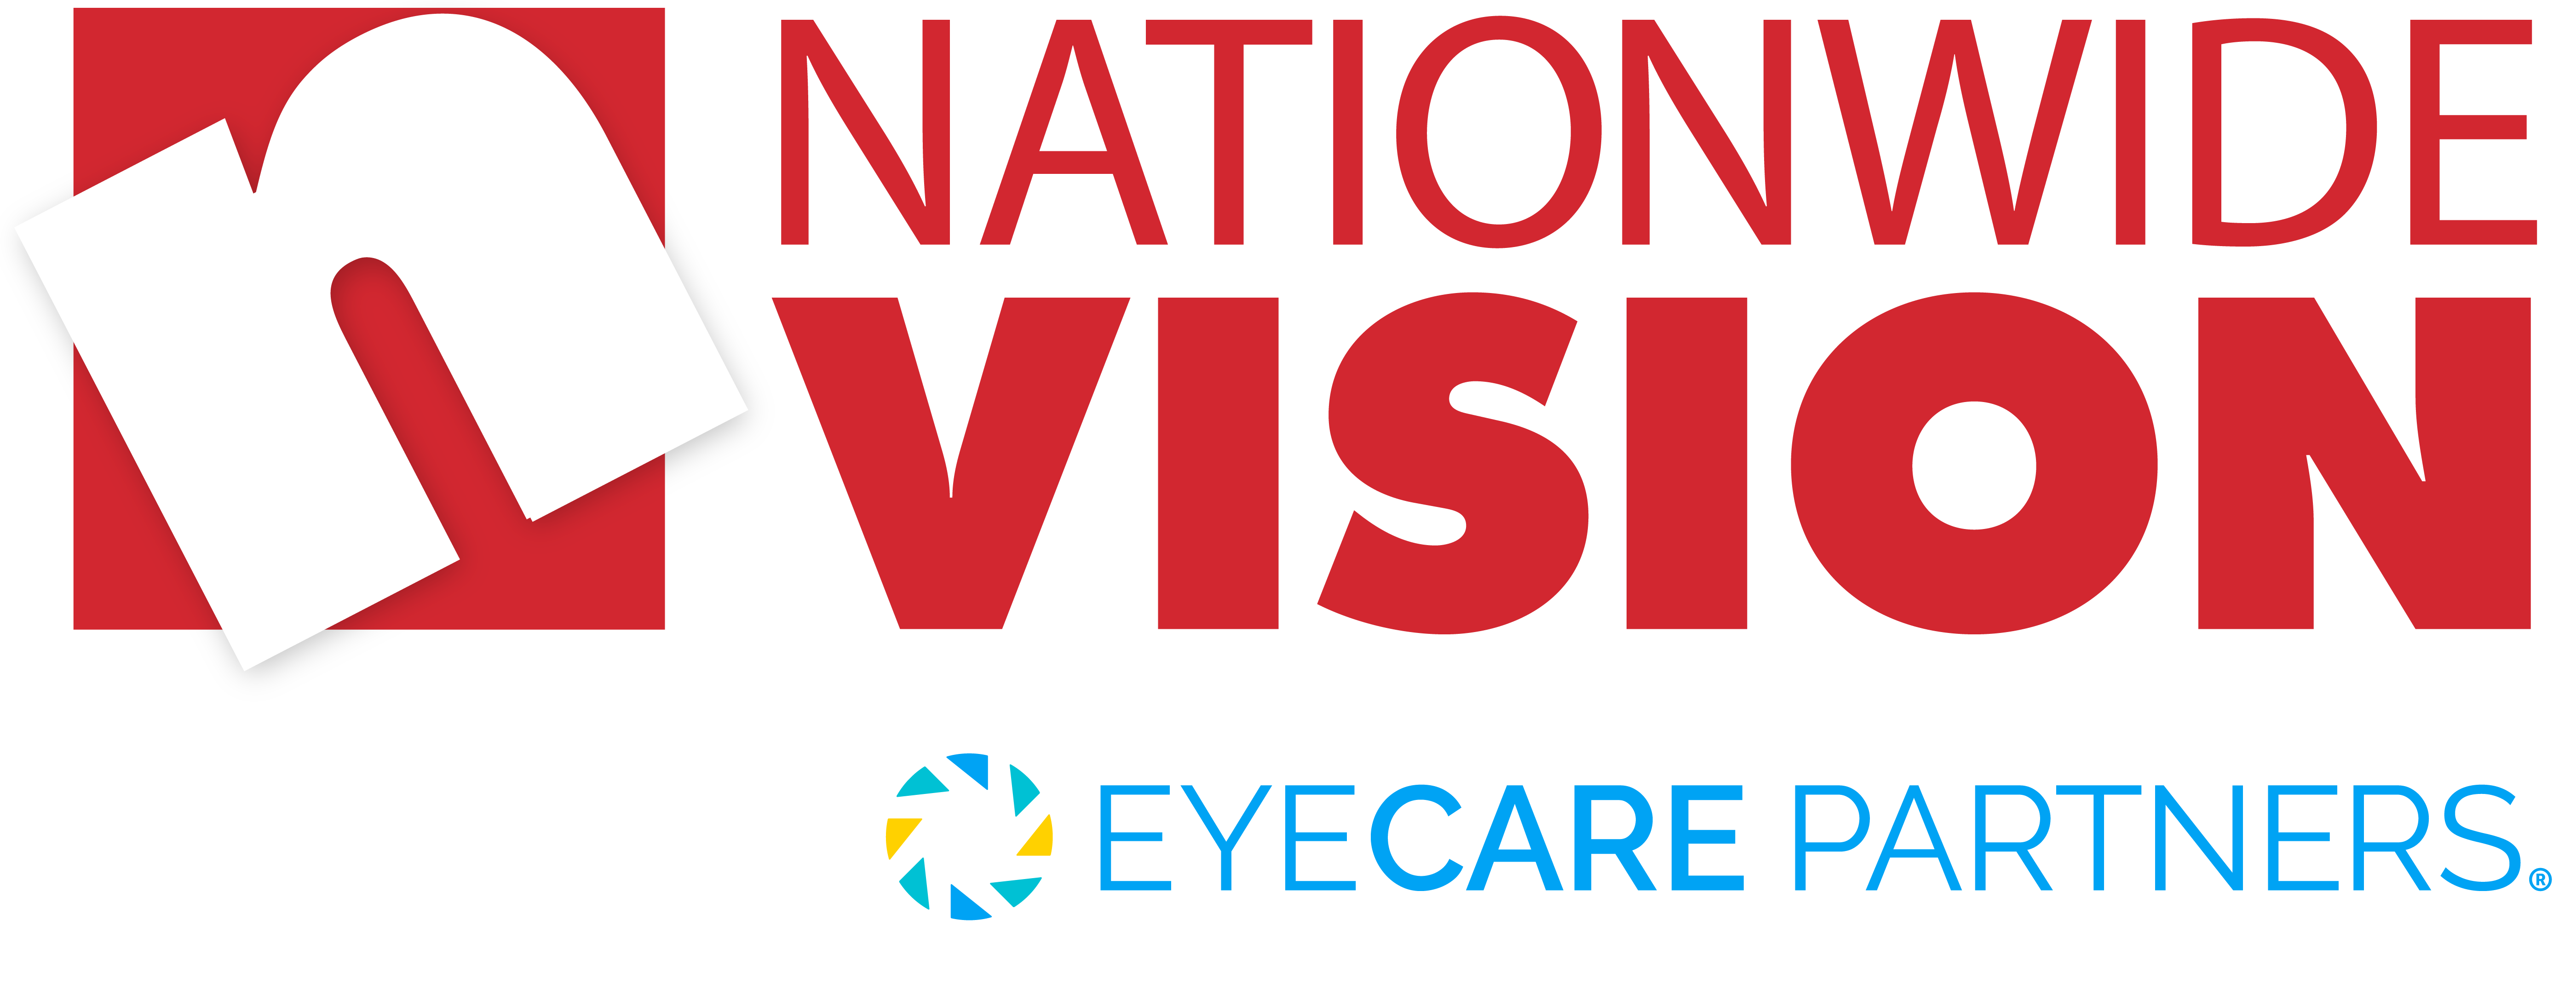 Nationwide Vision Logo